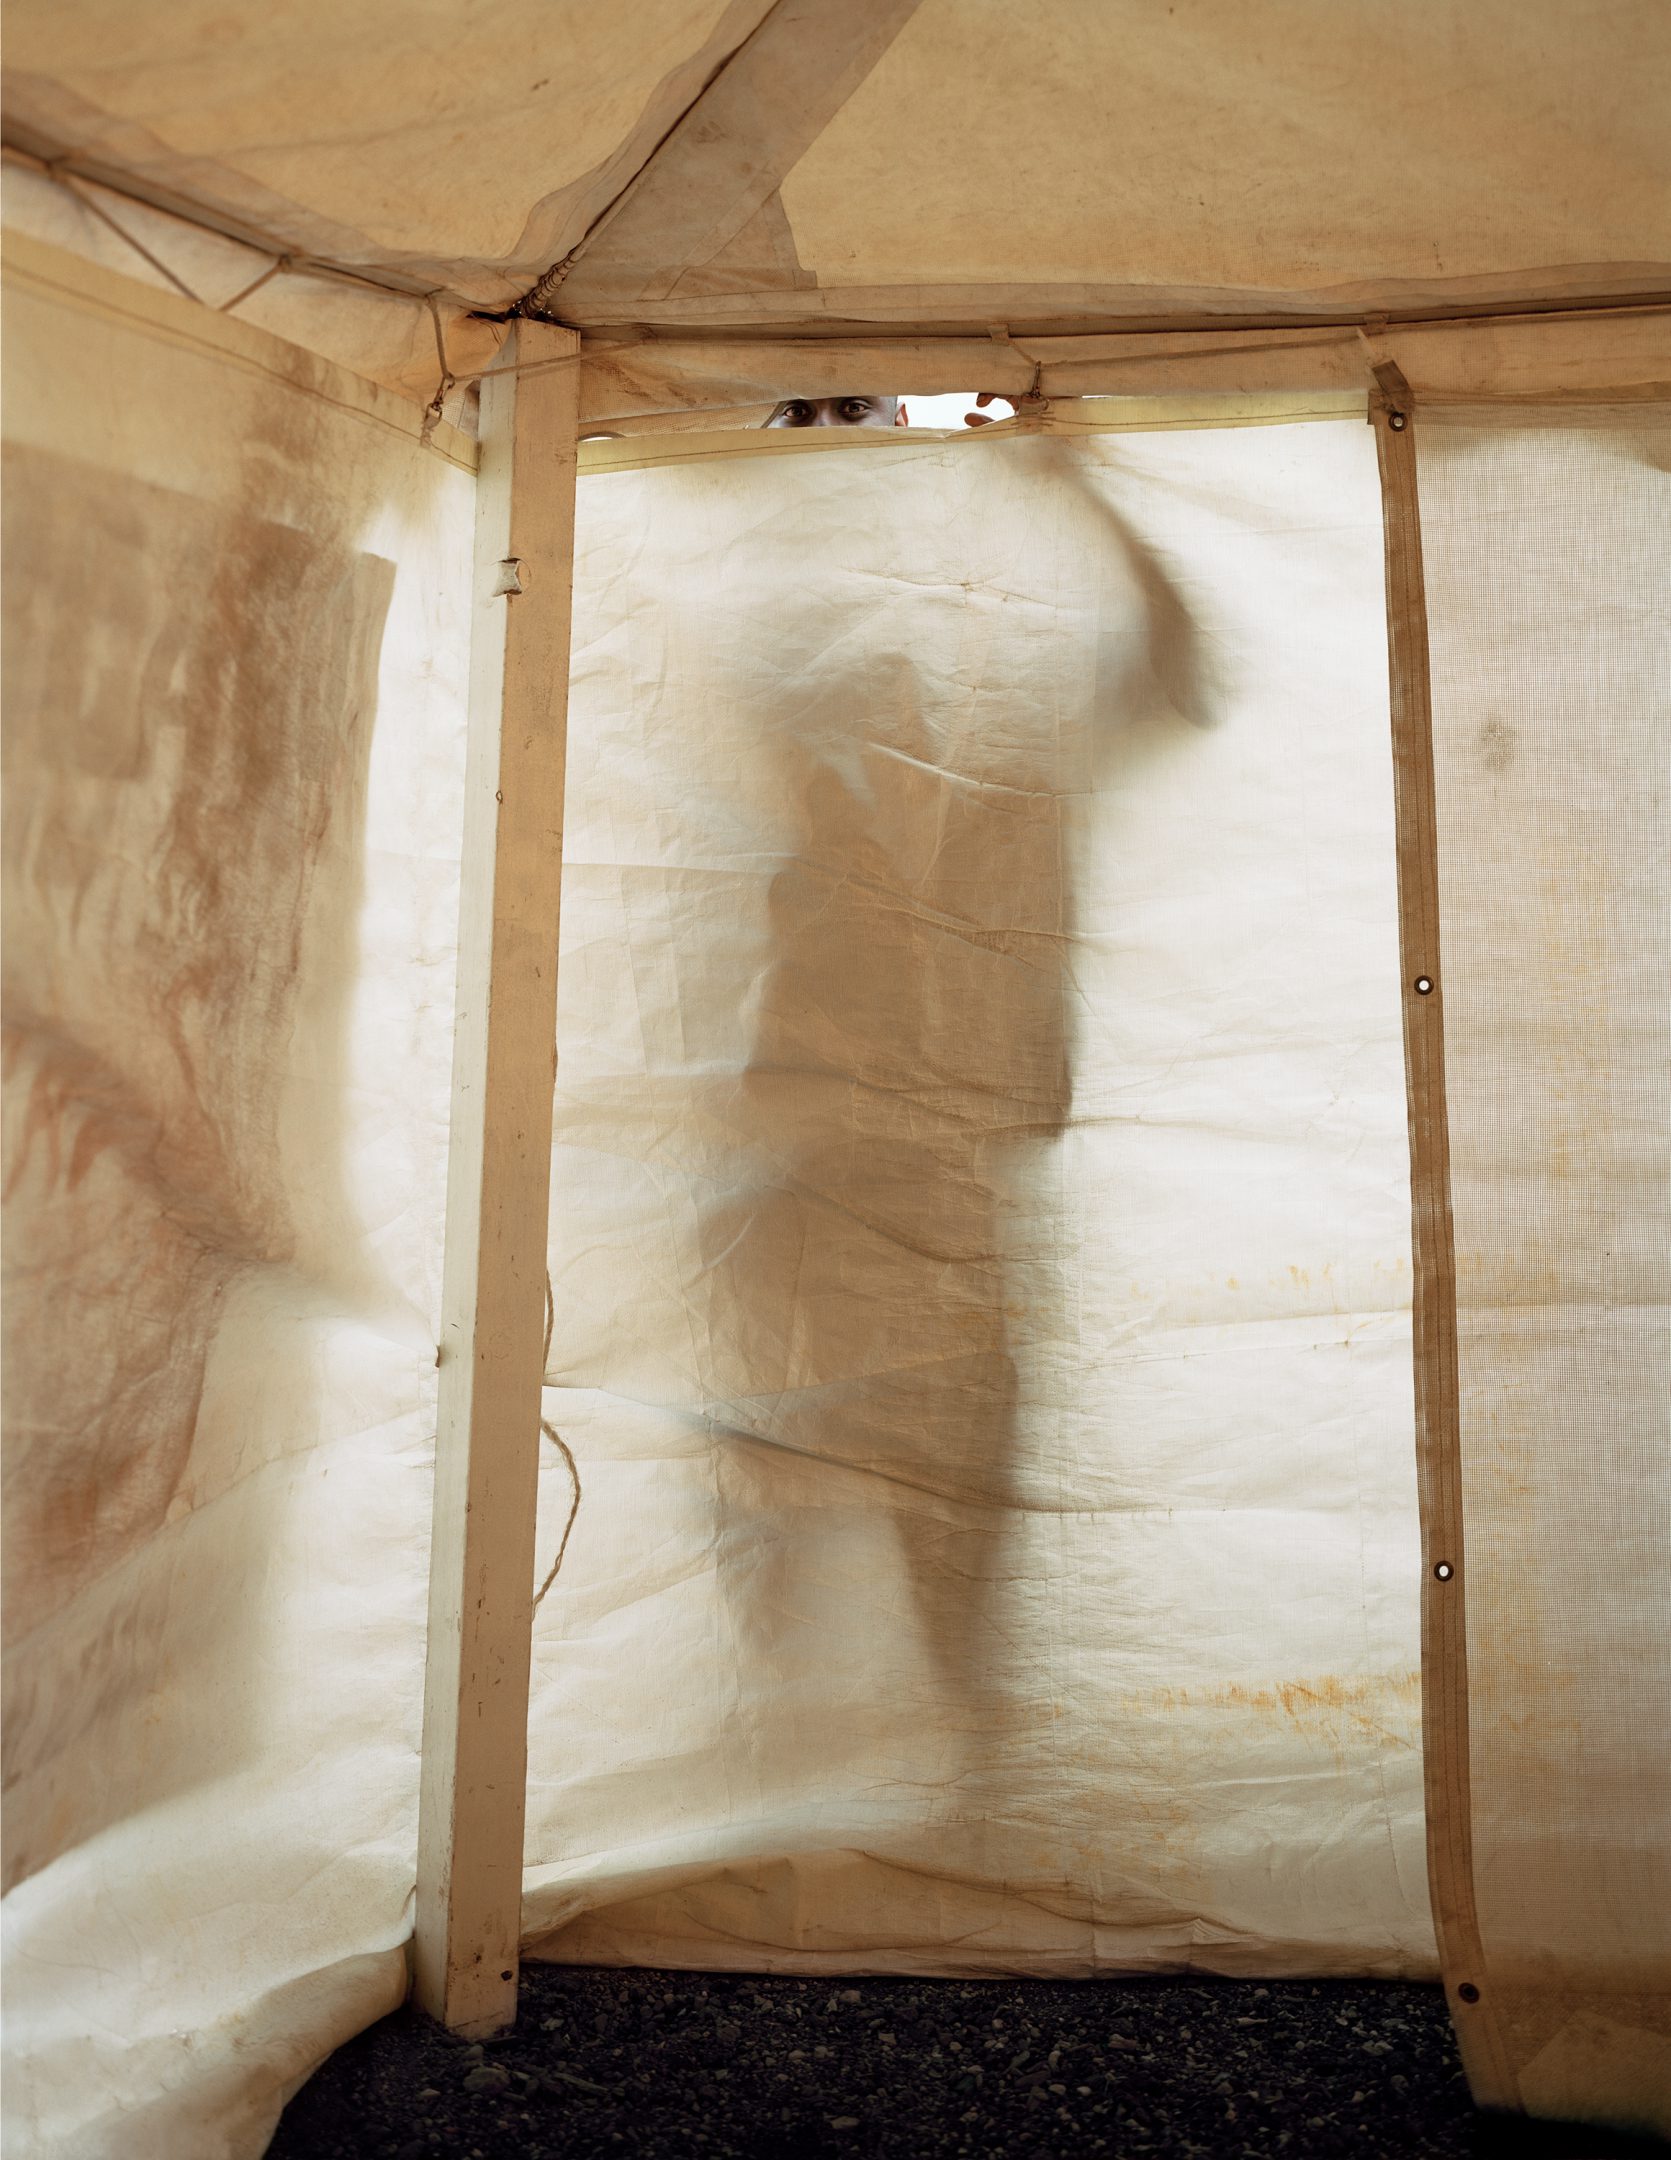 Paul D'Amato - Man In Revival Tent, 2004